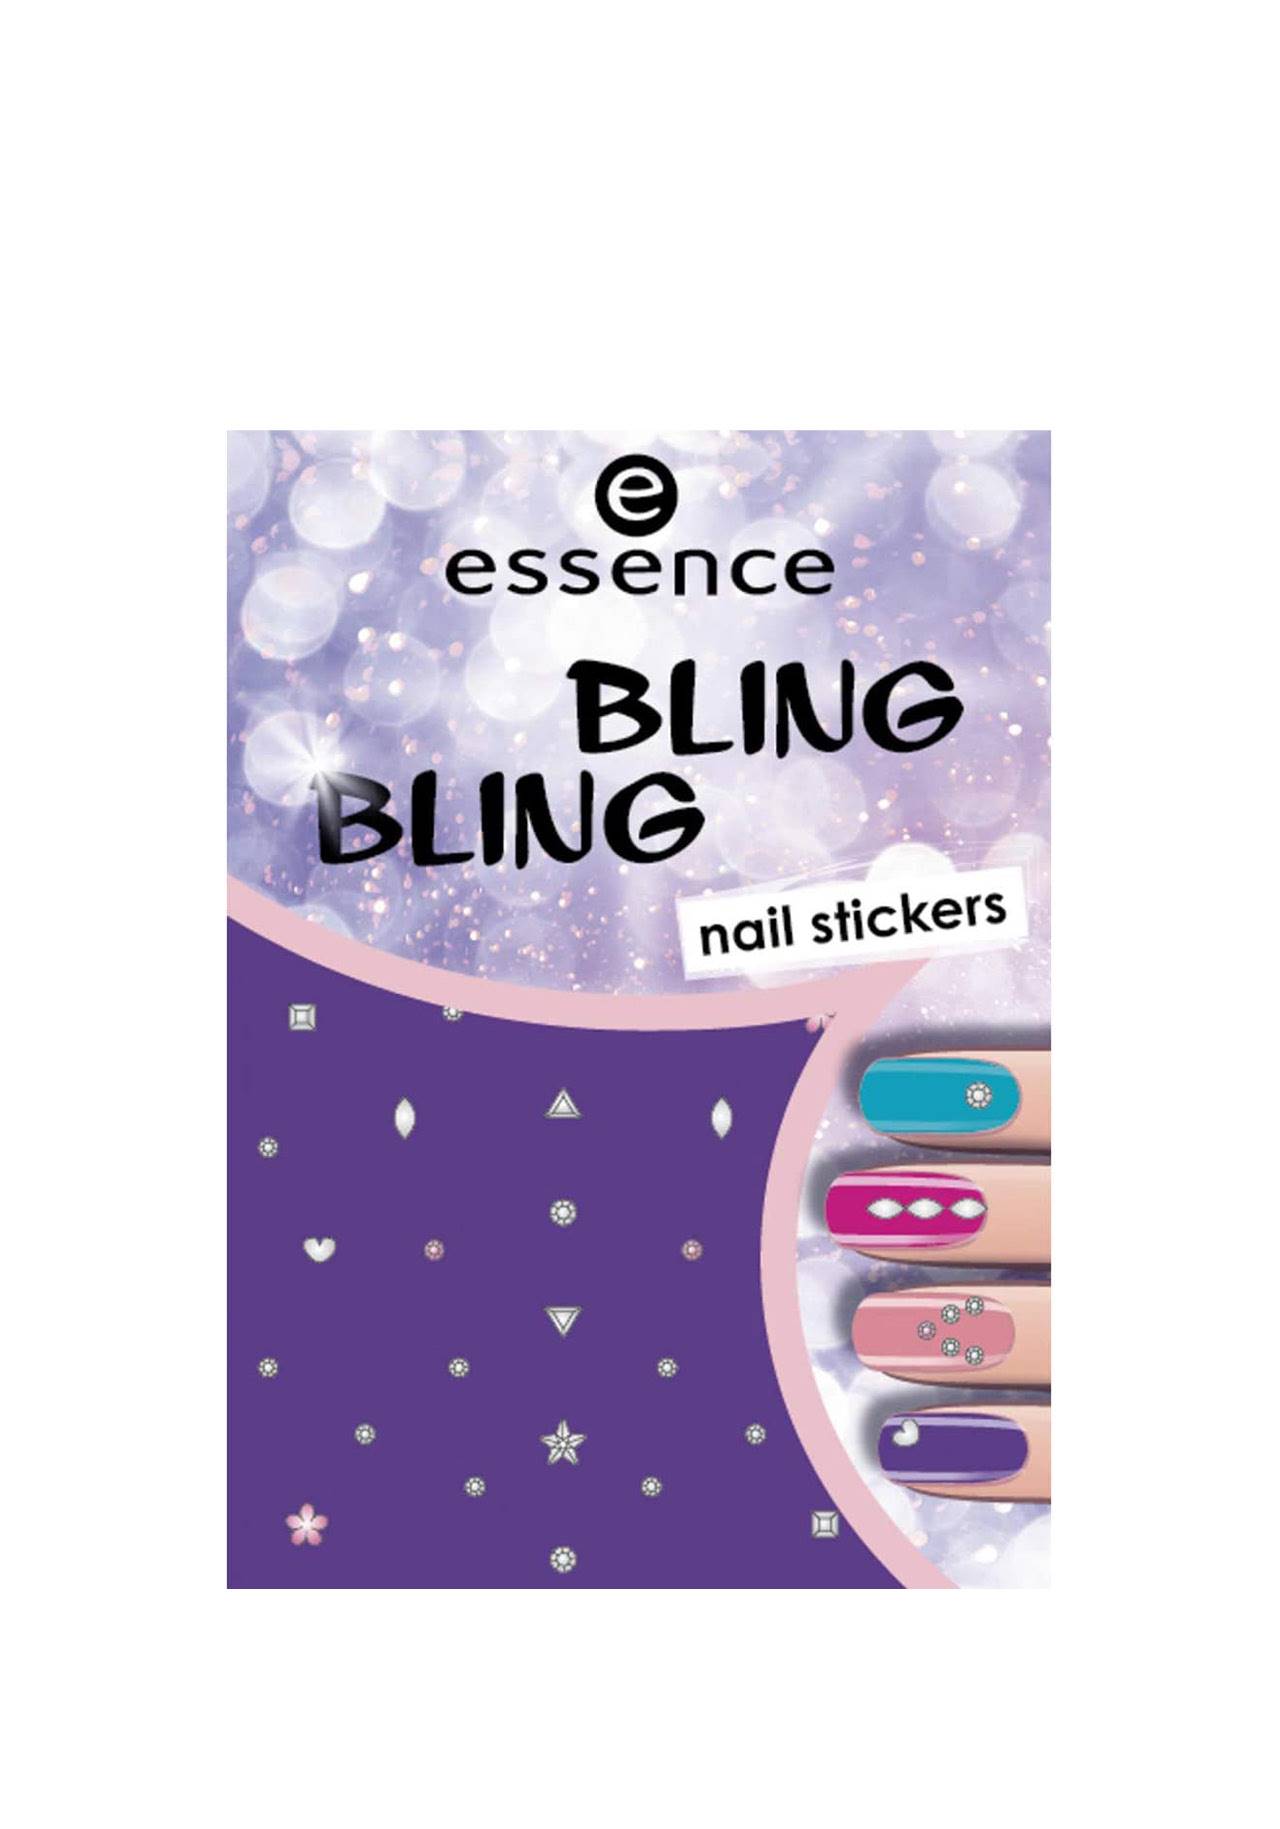 Trucos de belleza last minute Stickers para uñas Nail Art de Essence